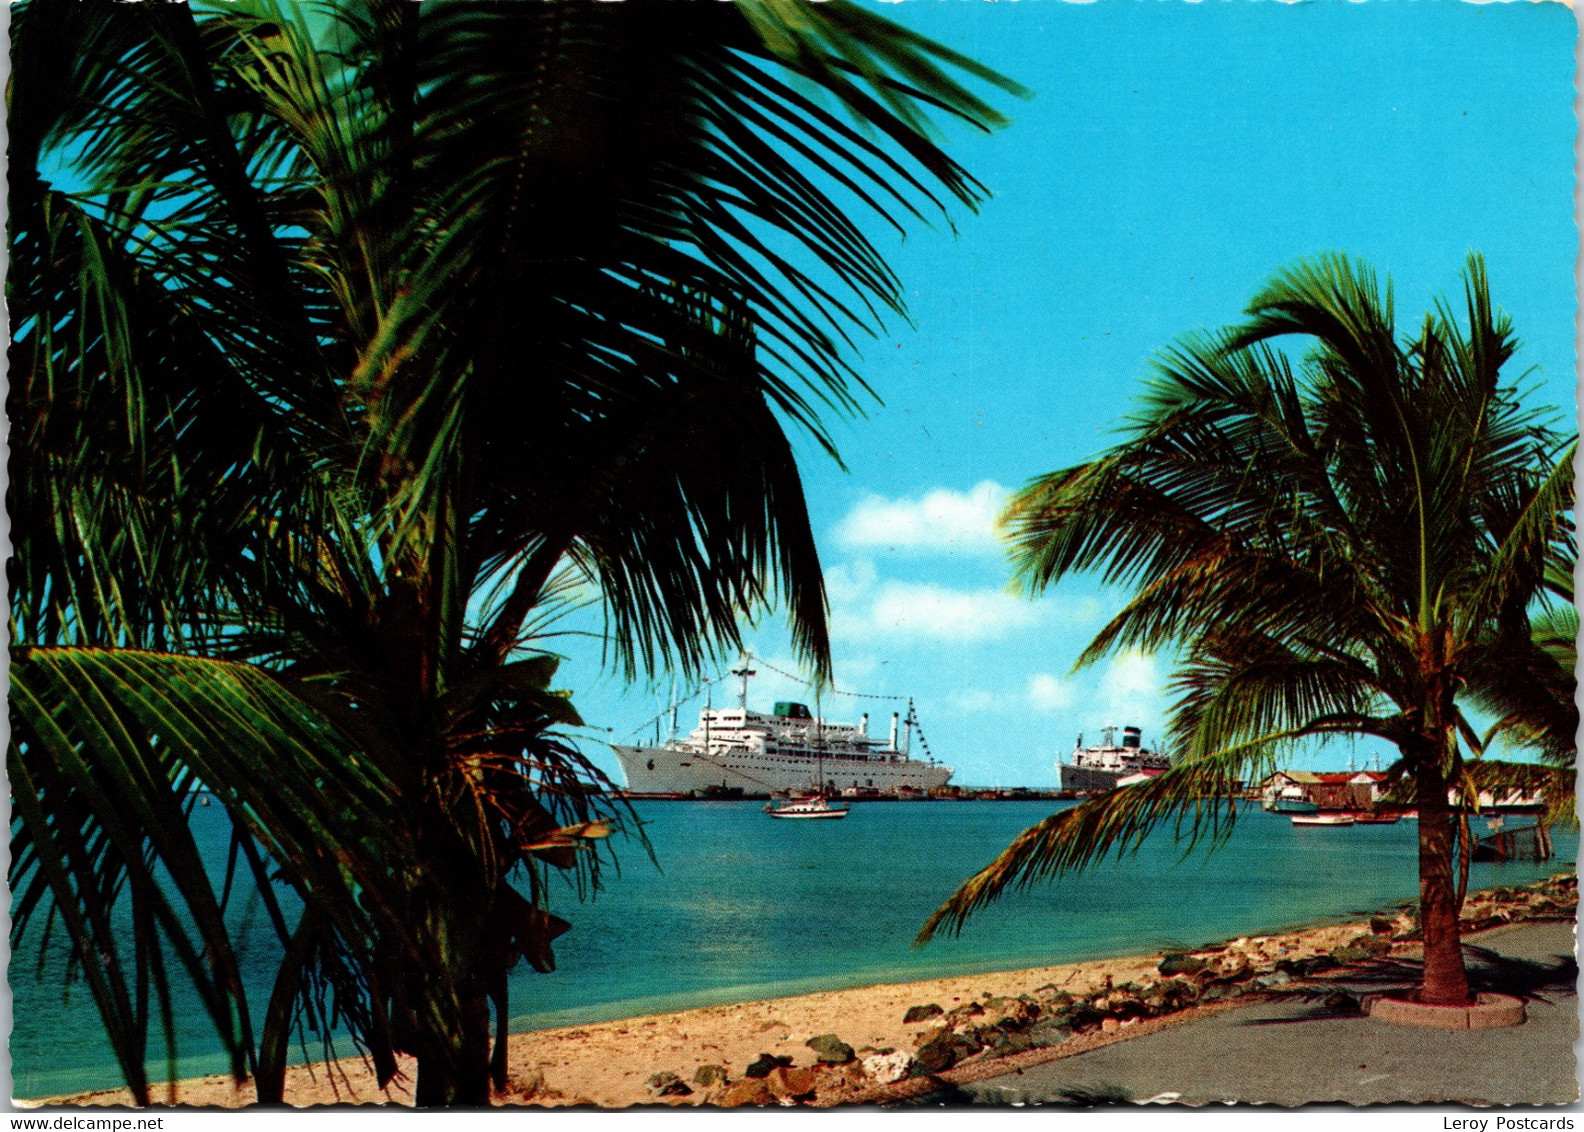 #1957 - Oranjestad Harbour, Ship, Aruba - Aruba